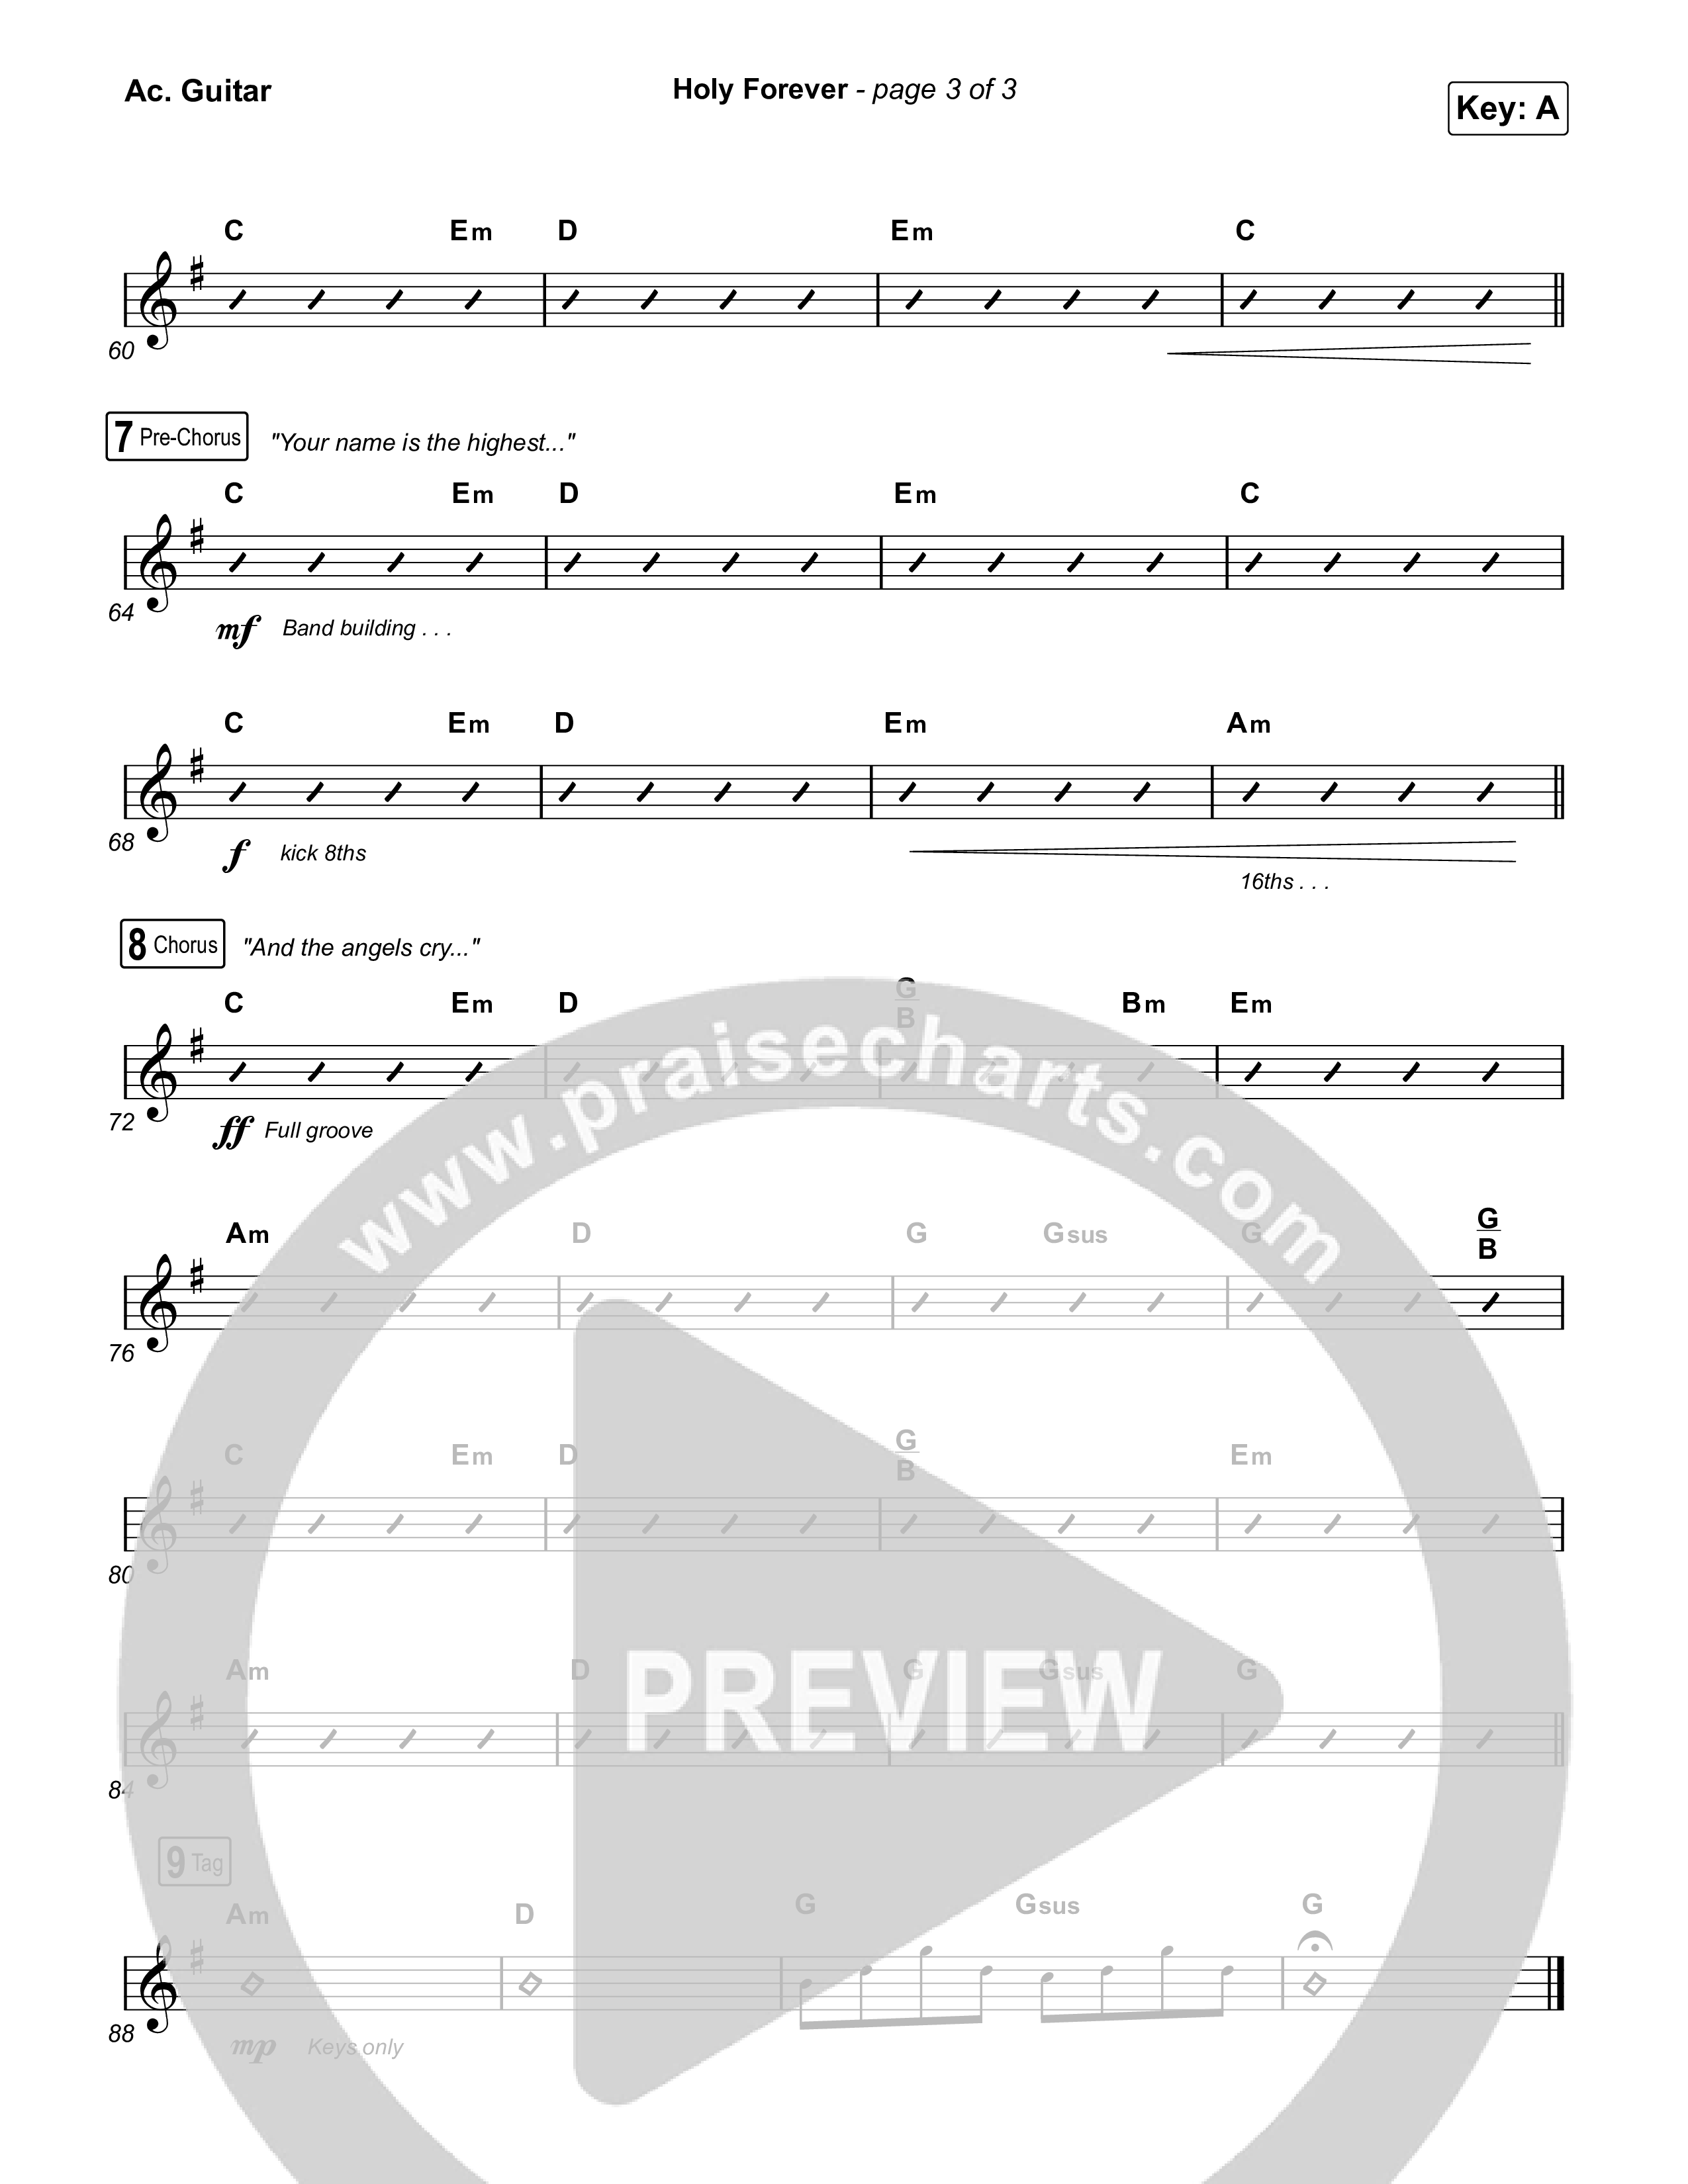 Holy Forever (Worship Choir SAB) Acoustic Guitar (Chris Tomlin / Arr. Mason Brown)